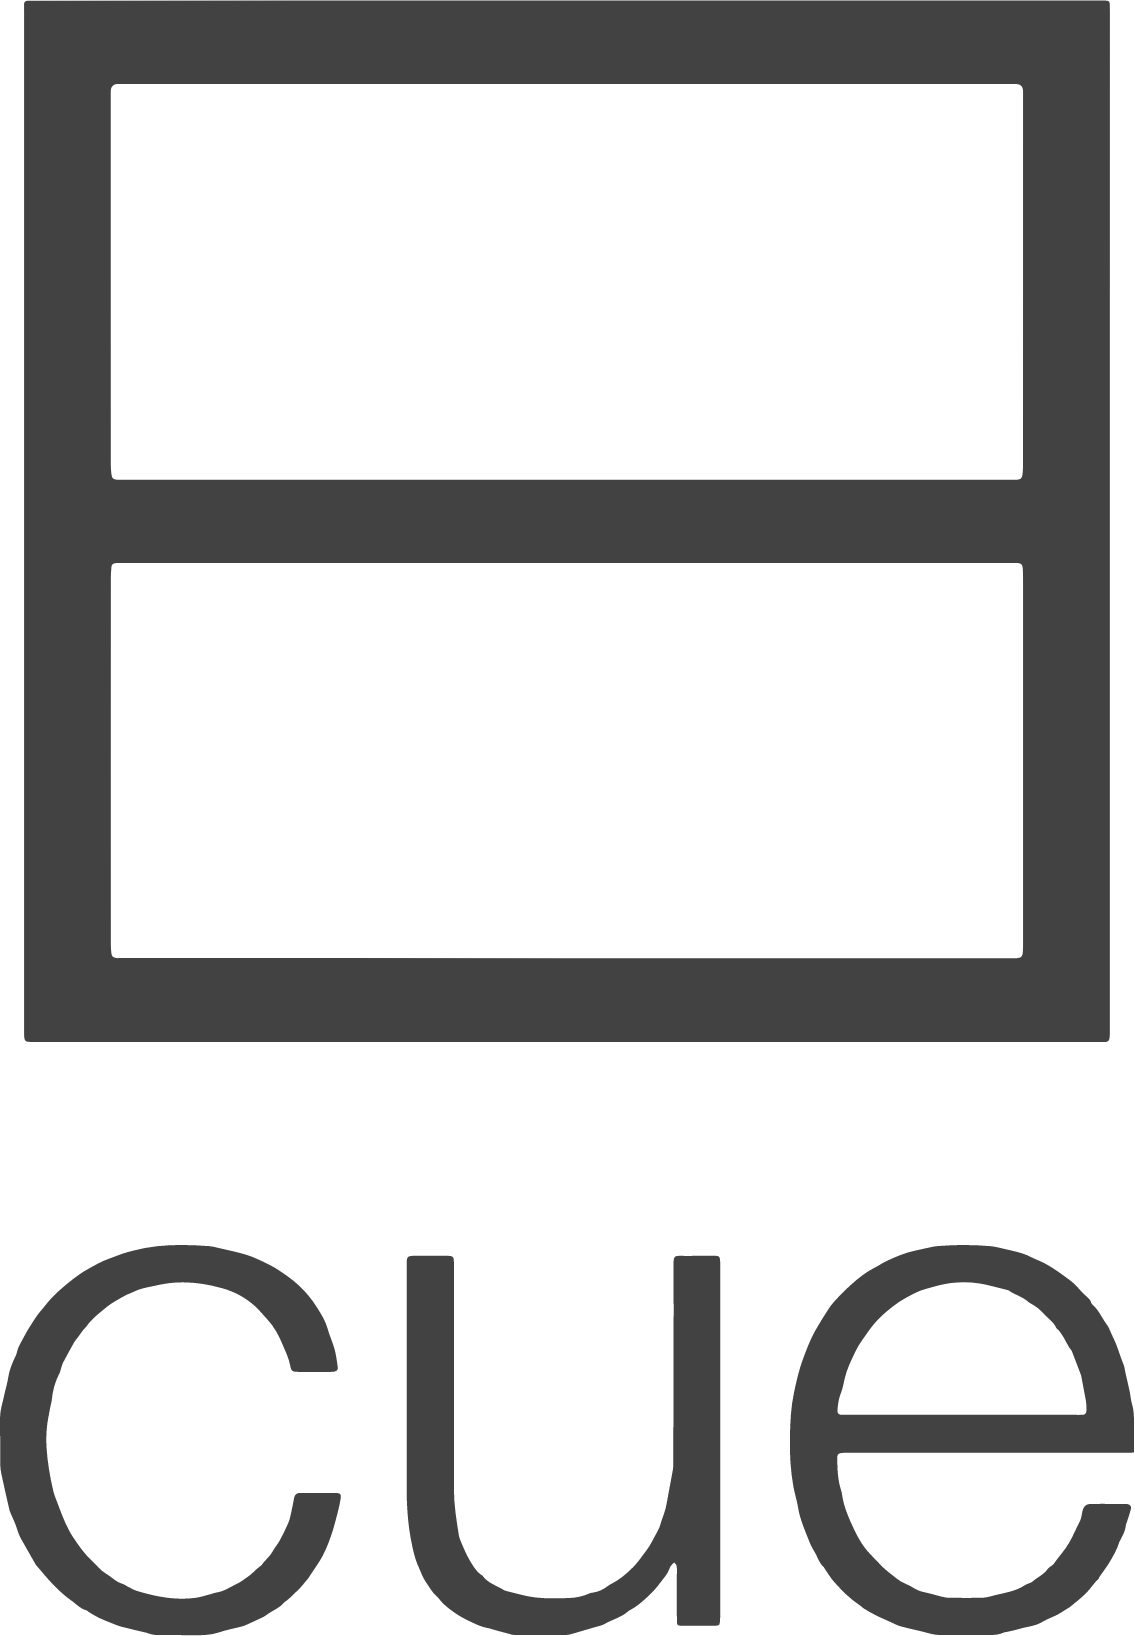 Cue Health logo large (transparent PNG)